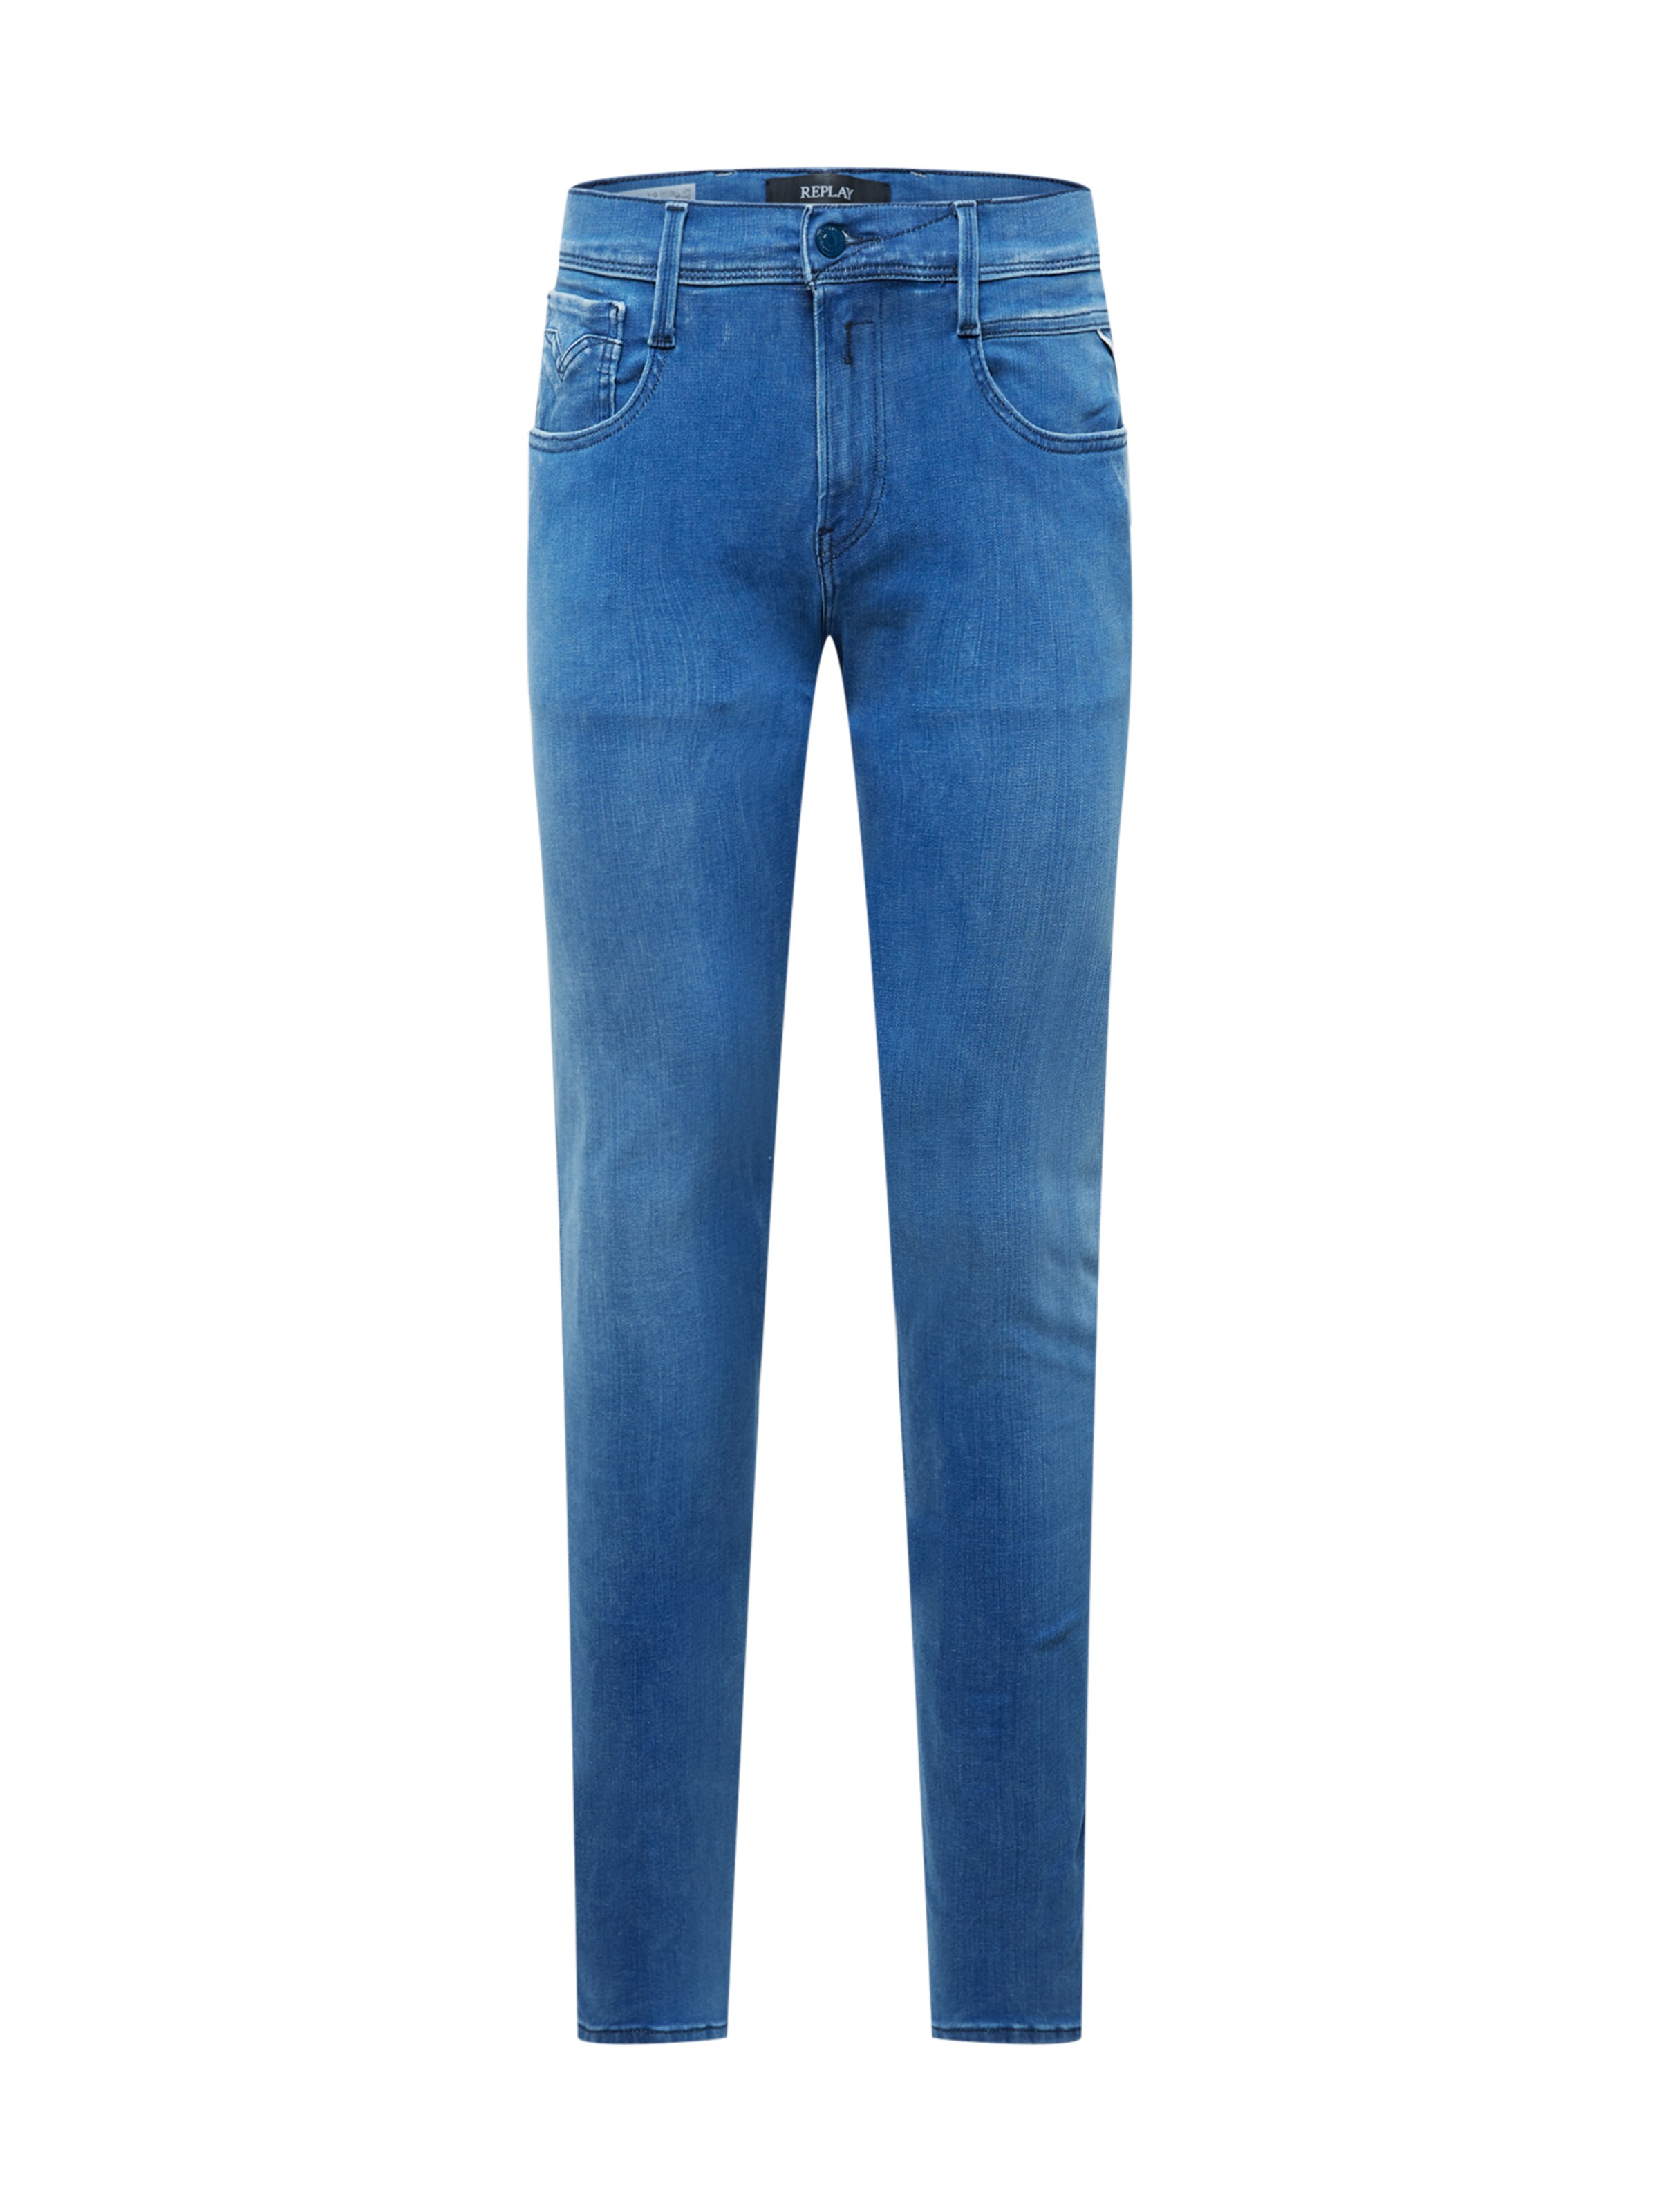 Jeans RIDGE ABOUT YOU Uomo Abbigliamento Pantaloni e jeans Jeans Jeans slim & sigaretta 